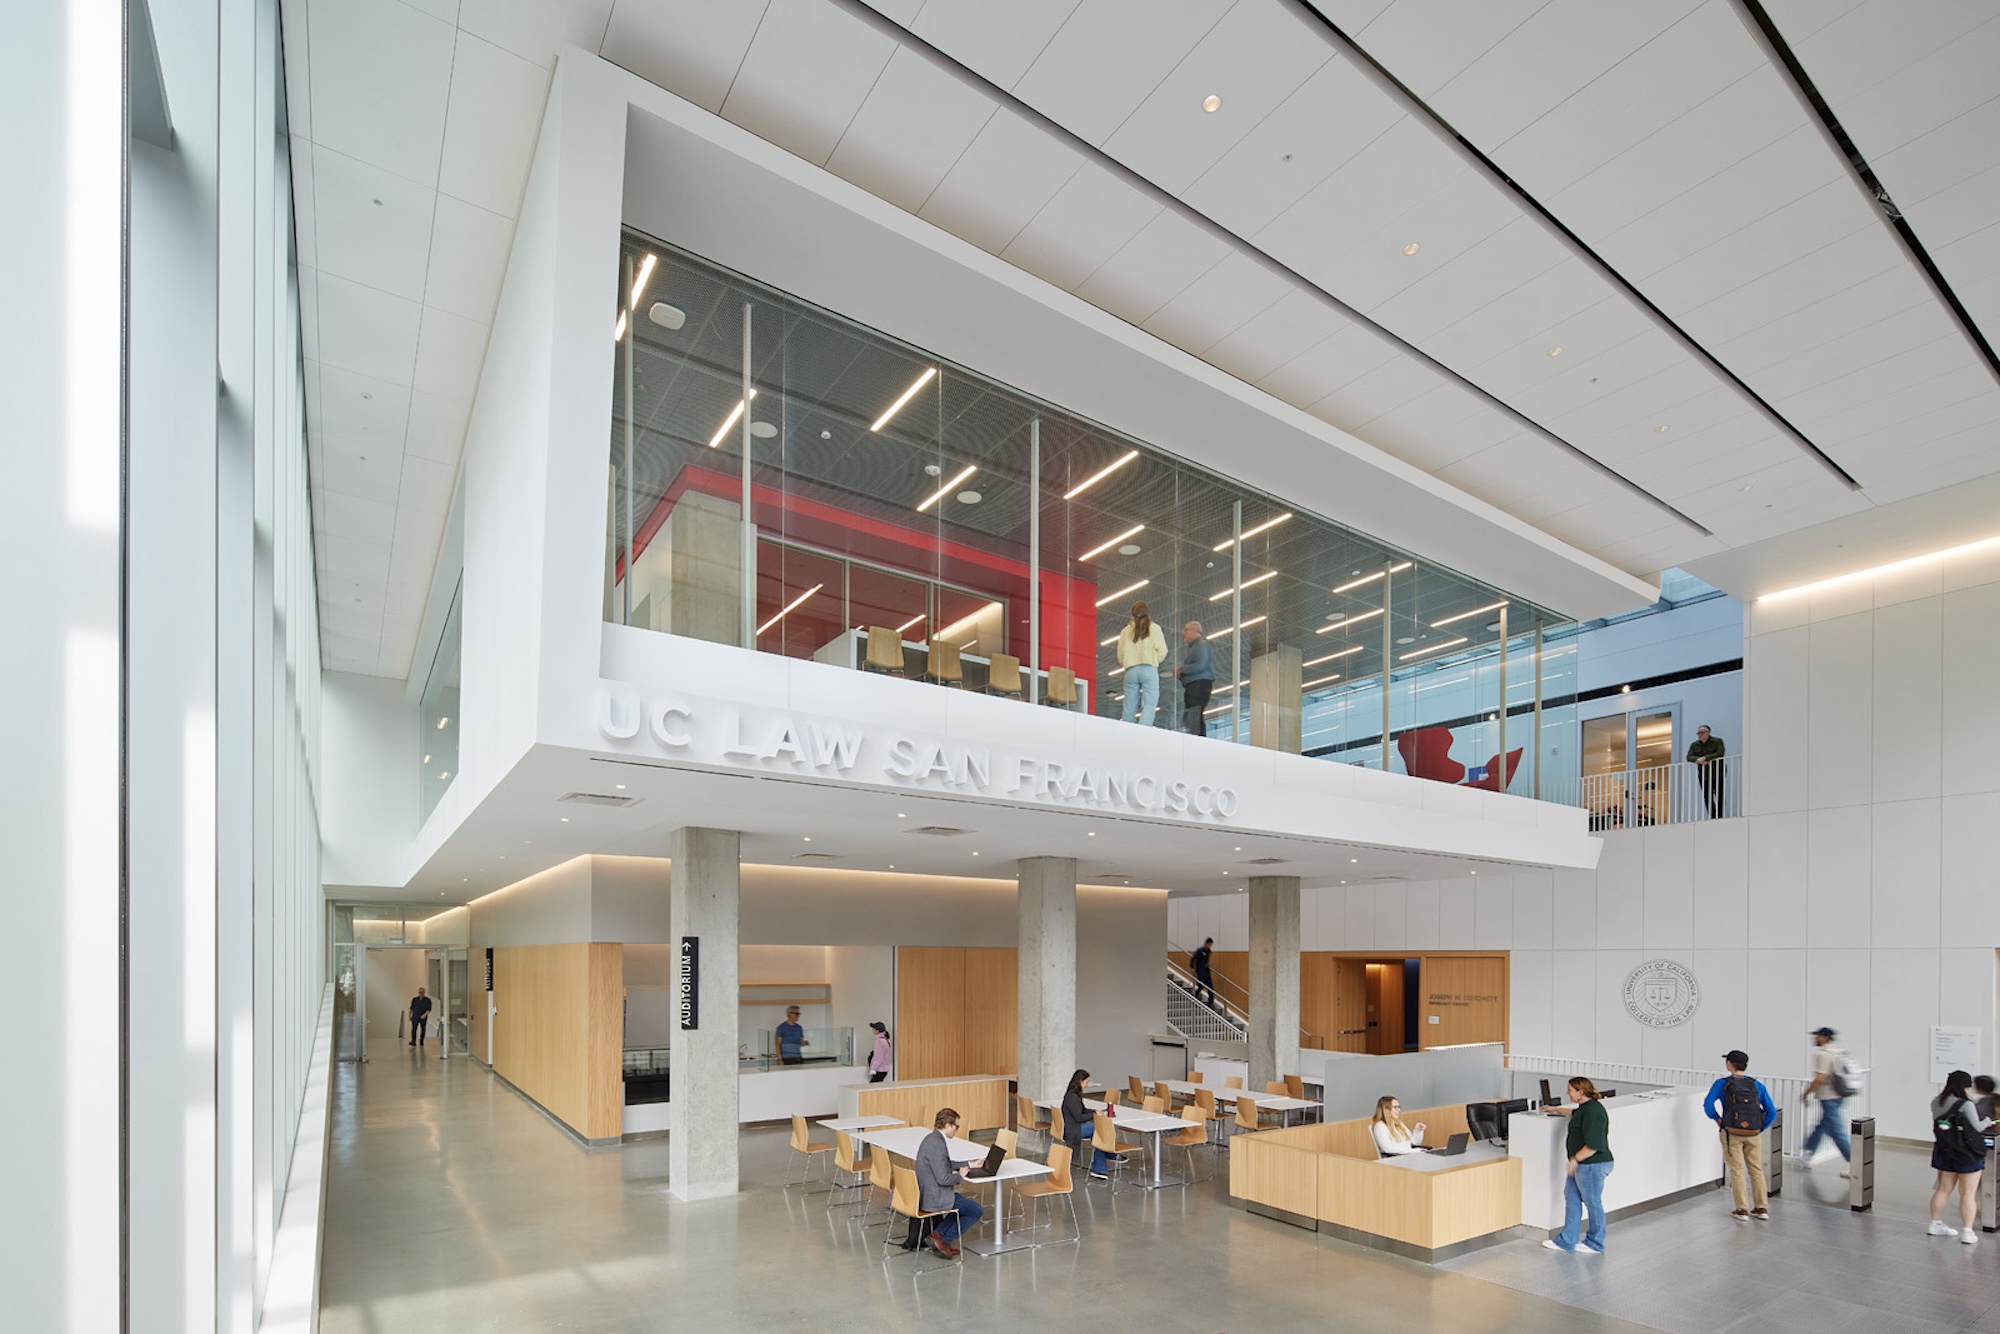 The LexLab, an innovation hub for connecting with local tech companies, overlooks the lobby atrium.